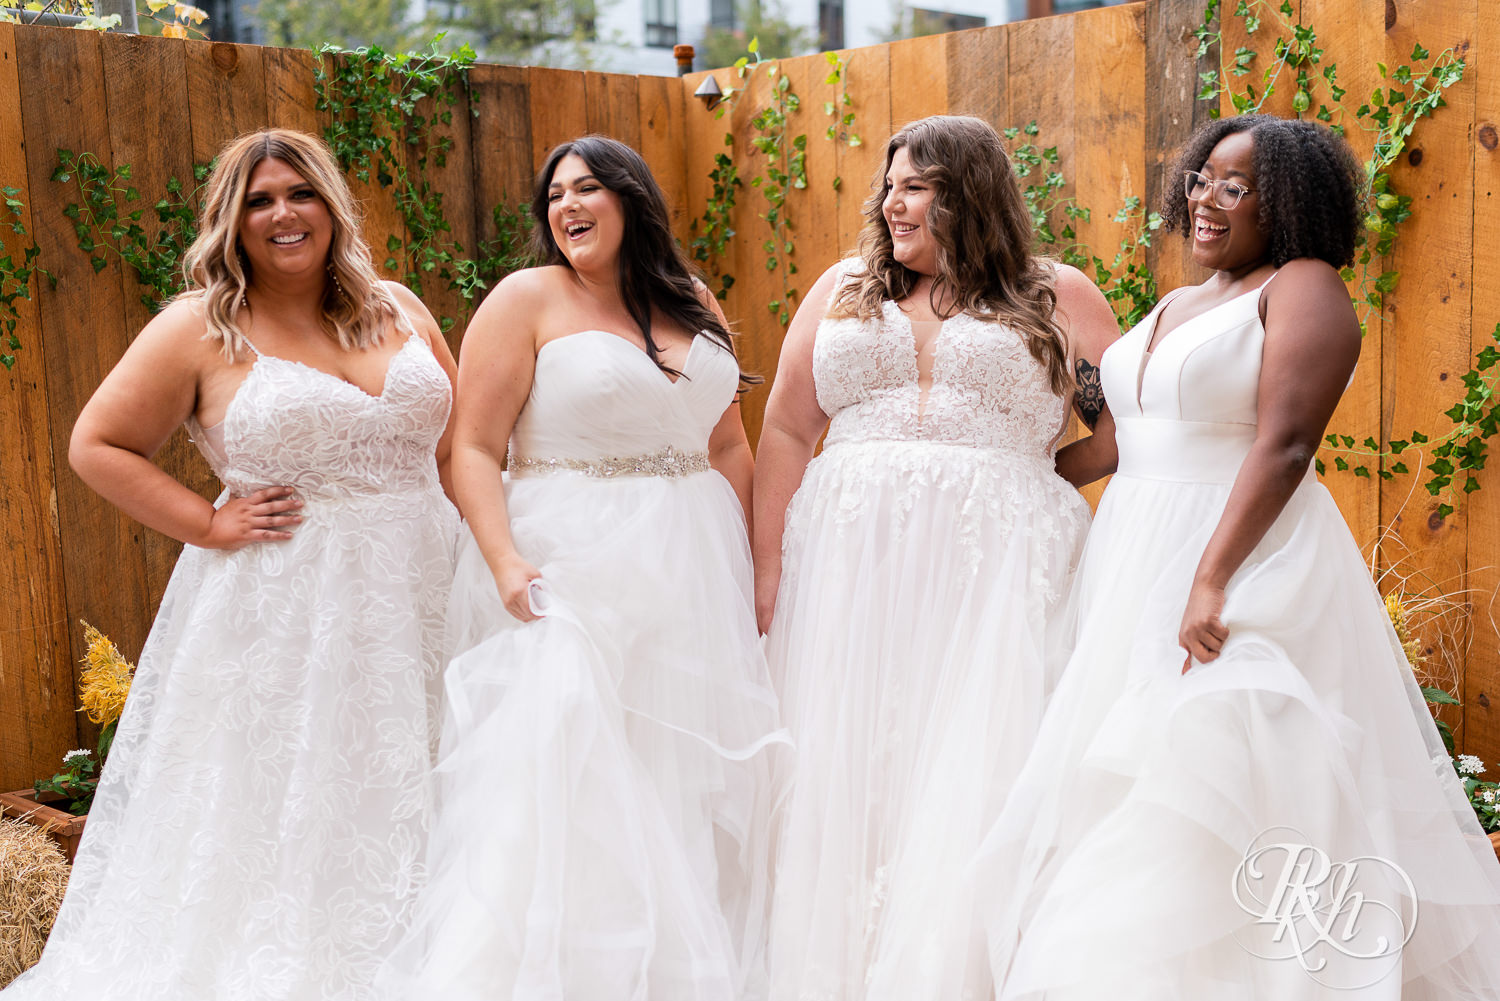 Plus size brides dancing in wedding dresses in Minneapolis, Minnesota.